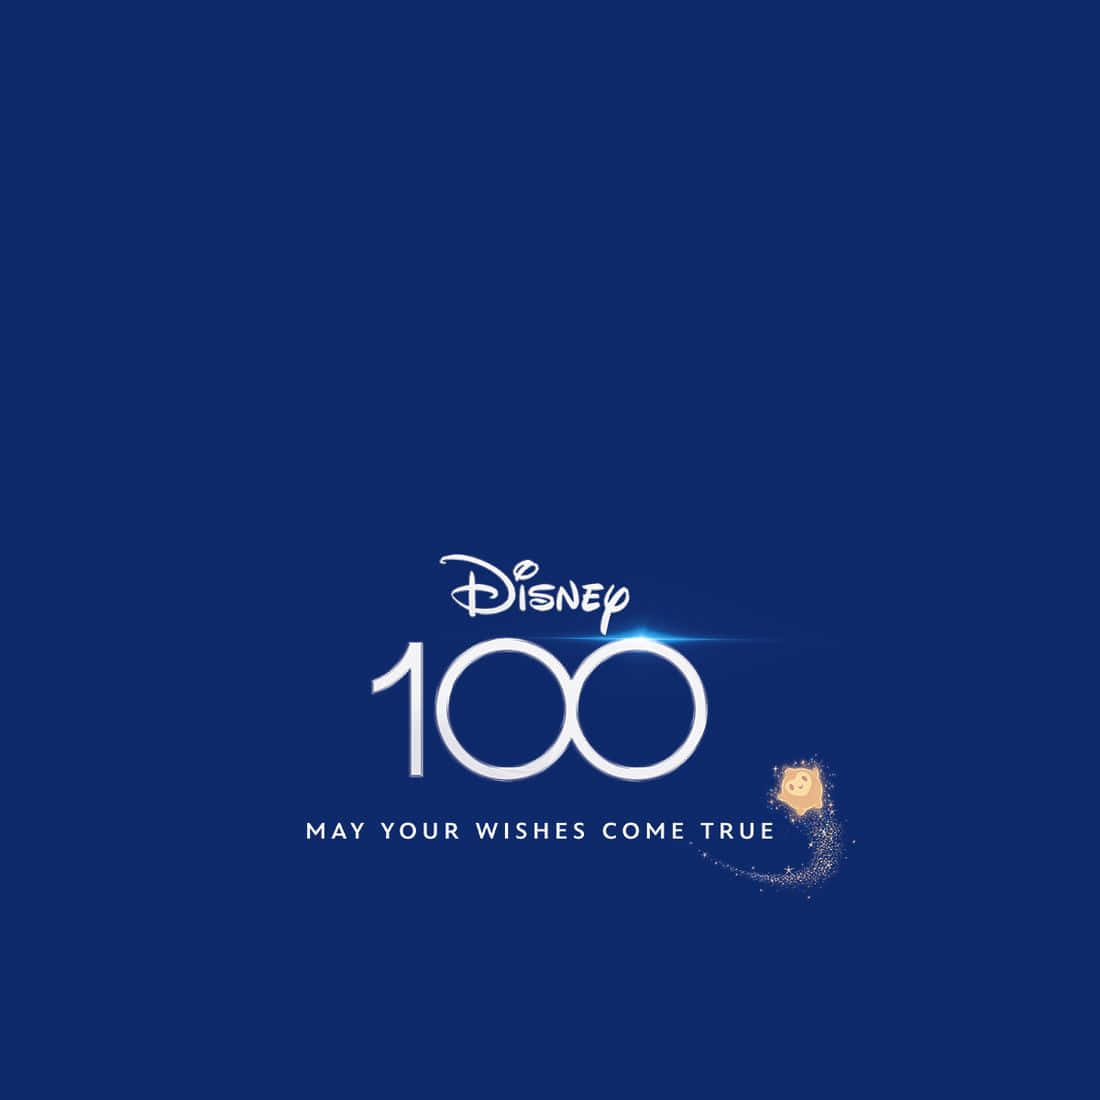 Disney100 Celebration Logo Wallpaper